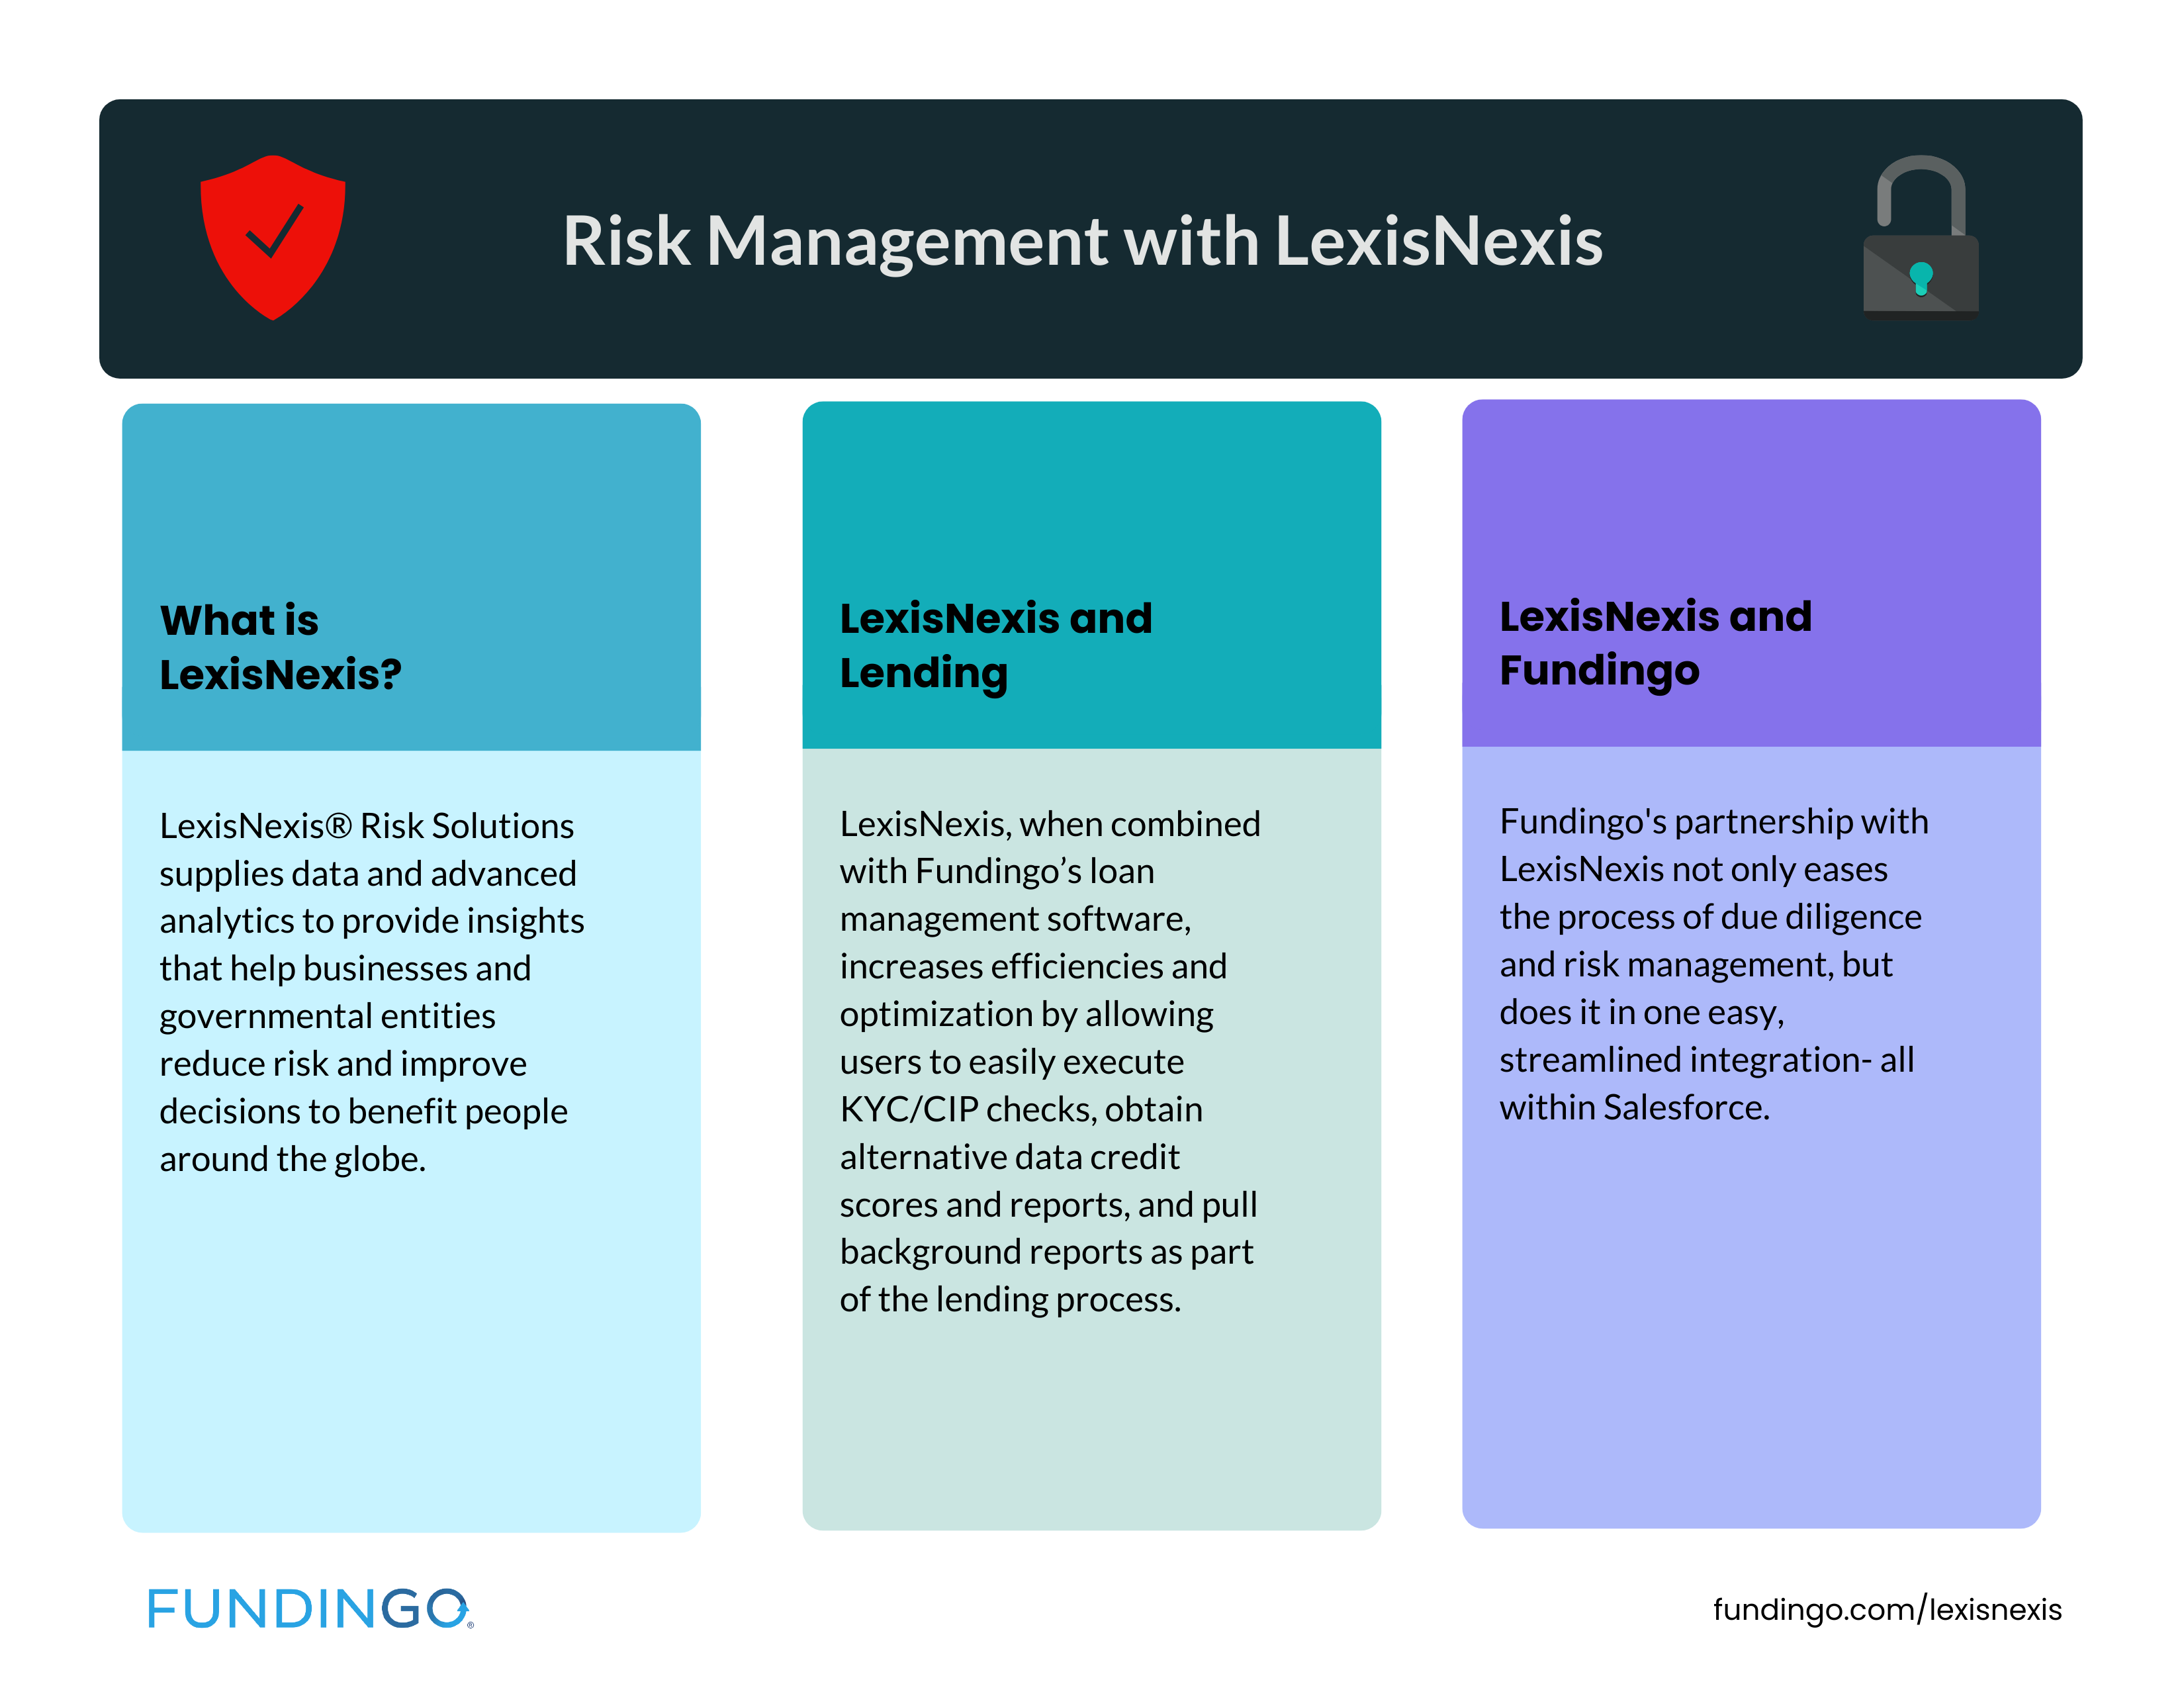 LexisNexis risk management Fundingo partnership infographic